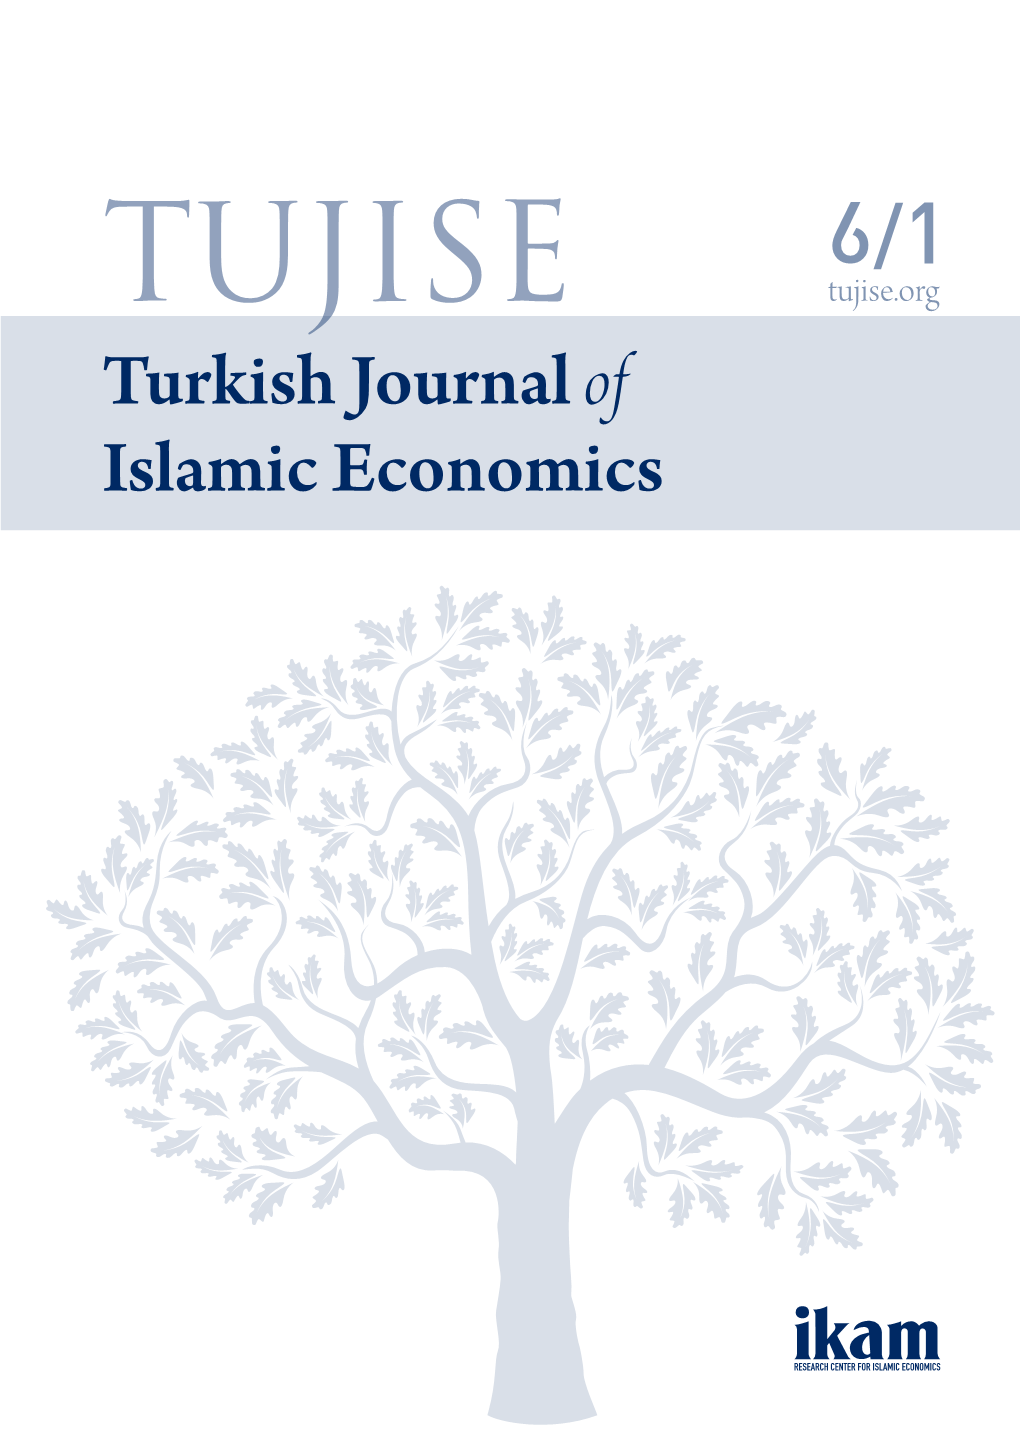 TUJISE Tujise.Org Turkish Journal of Islamic Economics